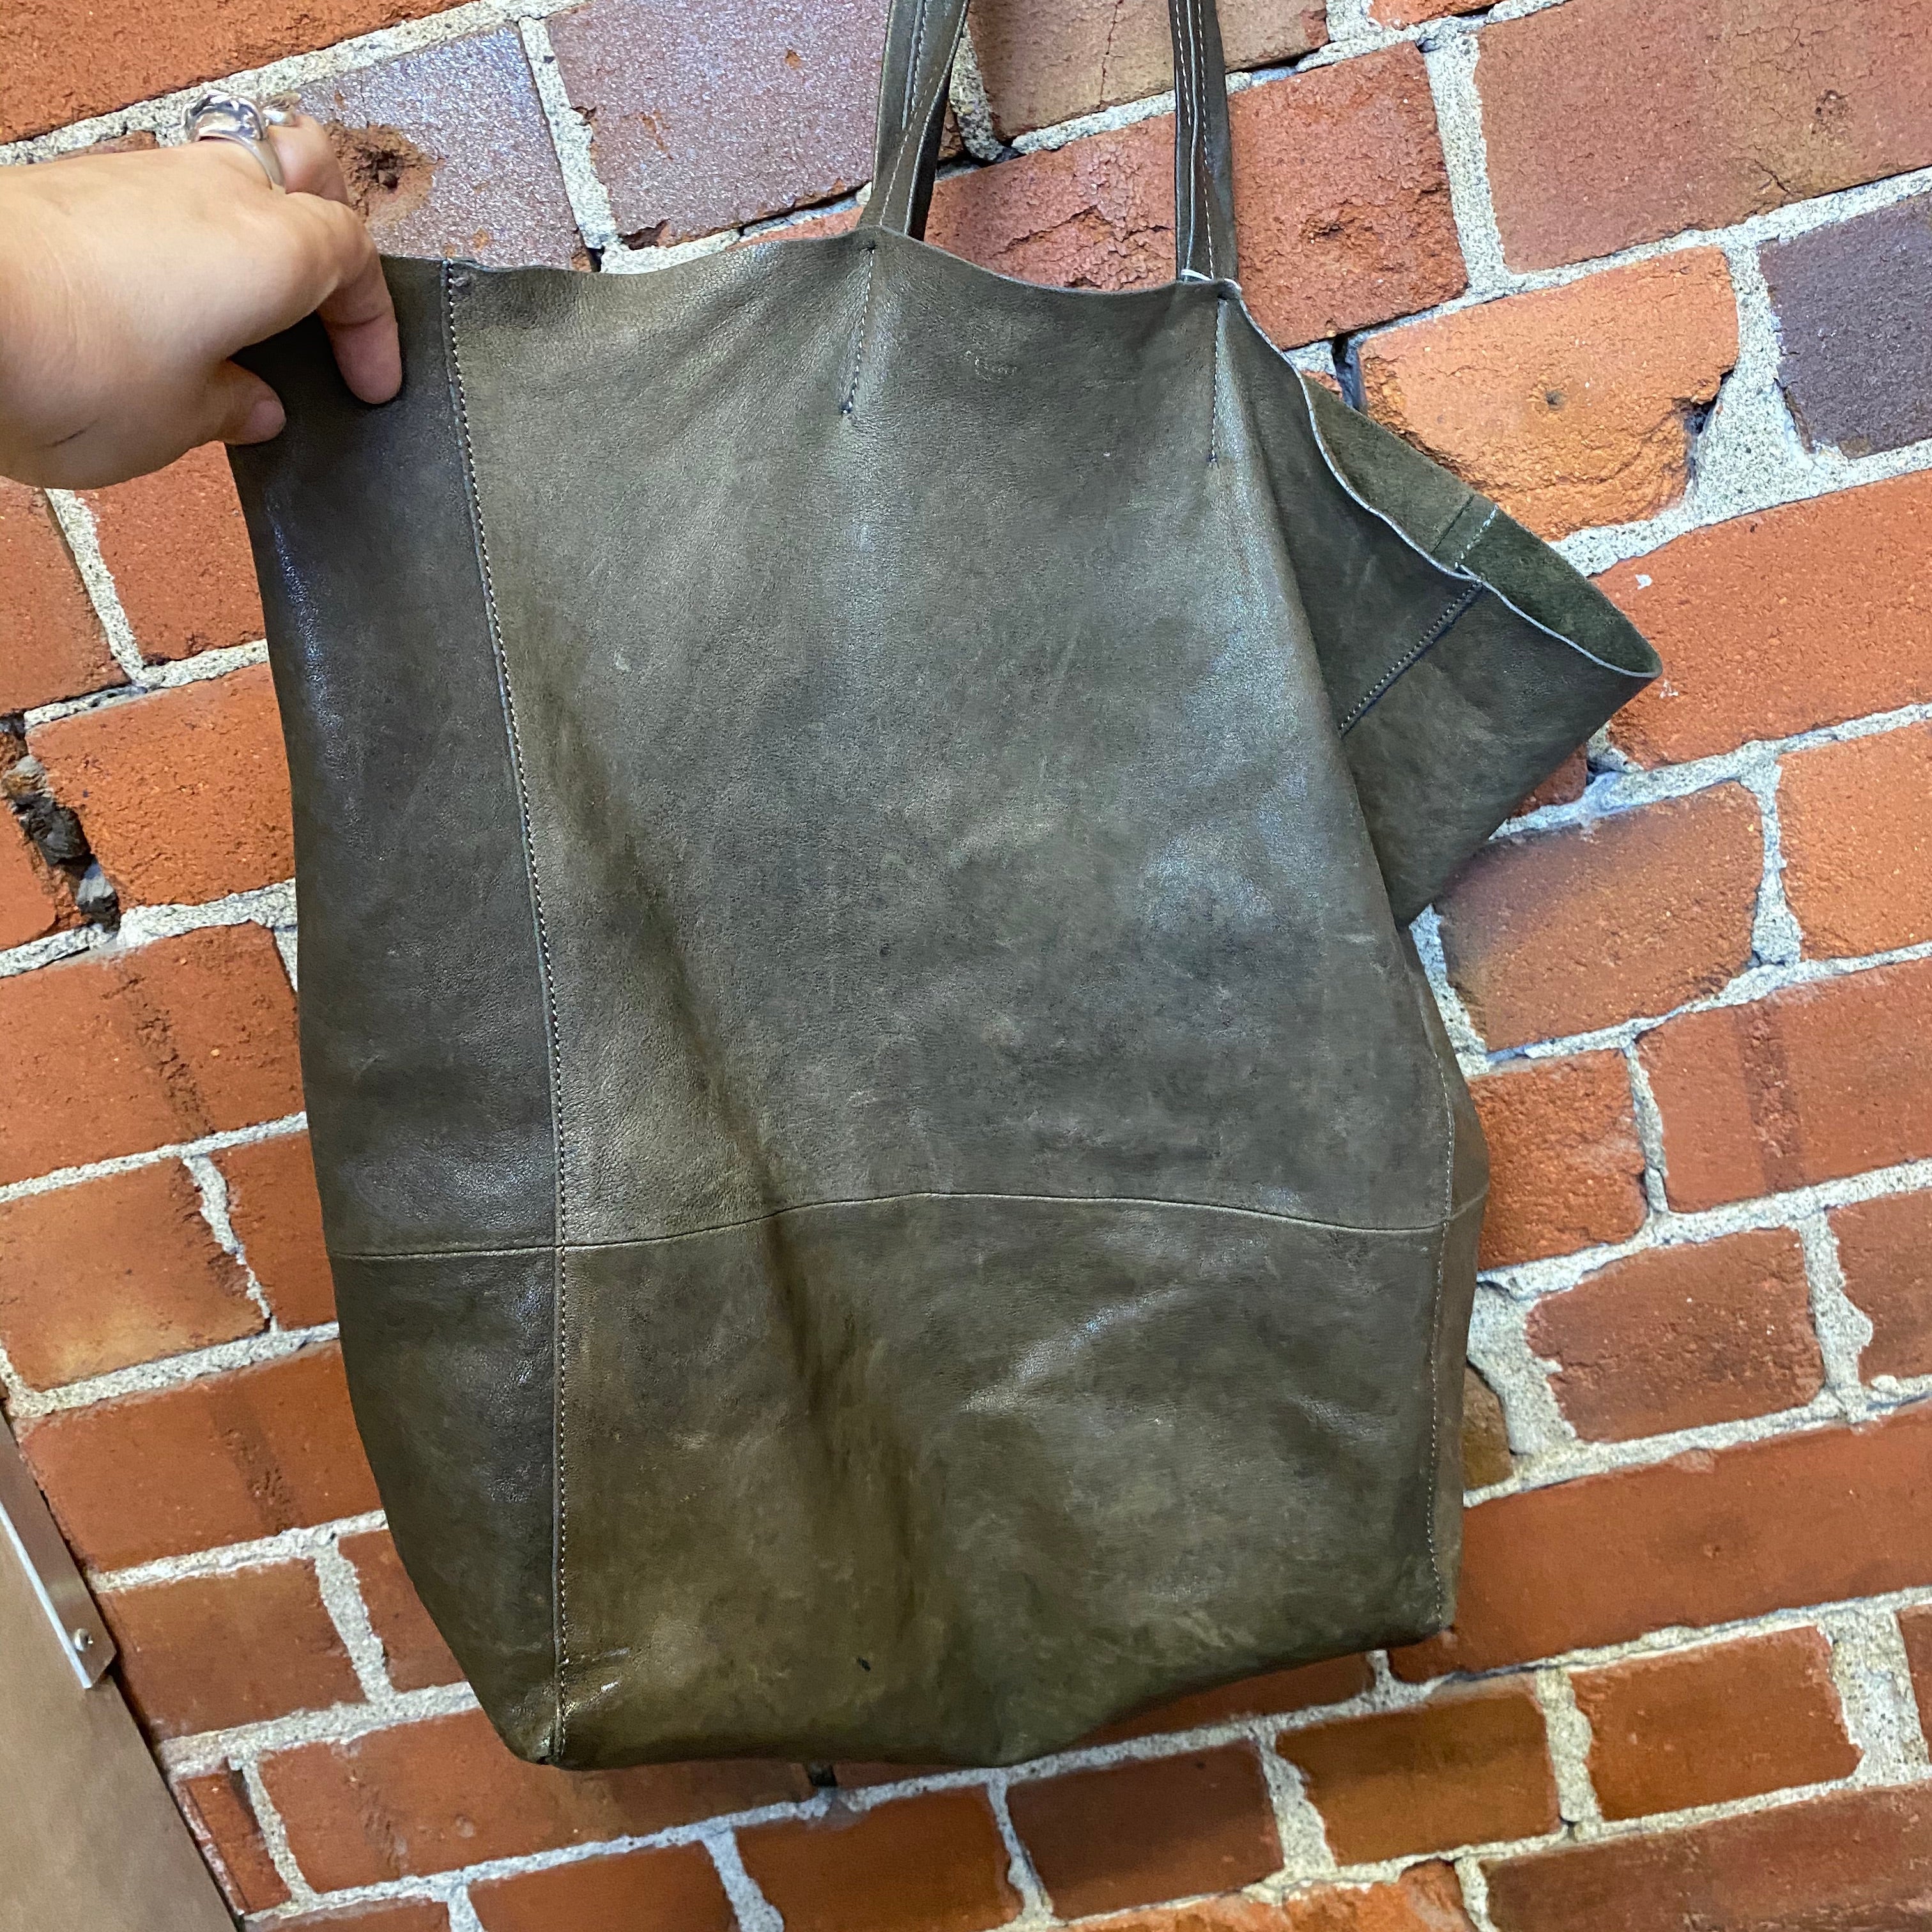 CELINE very beat up leather handbag